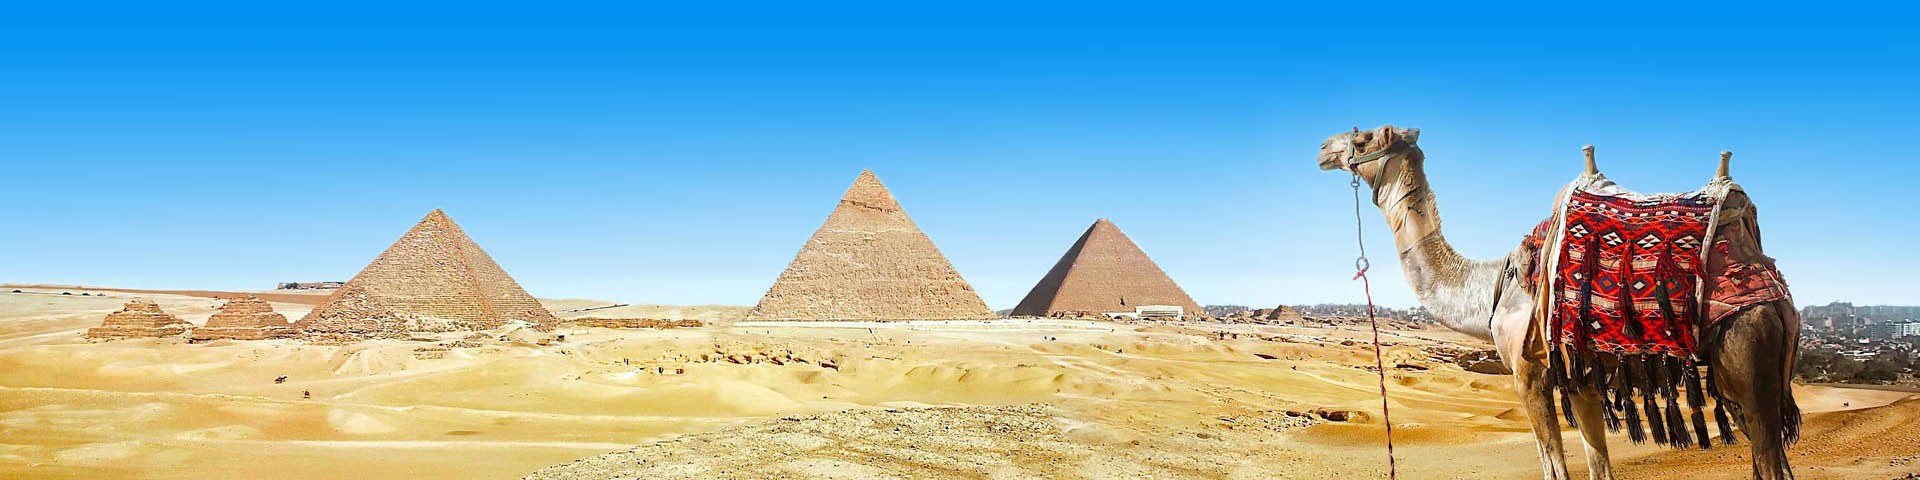 Pyramides en kamelen in Egypte